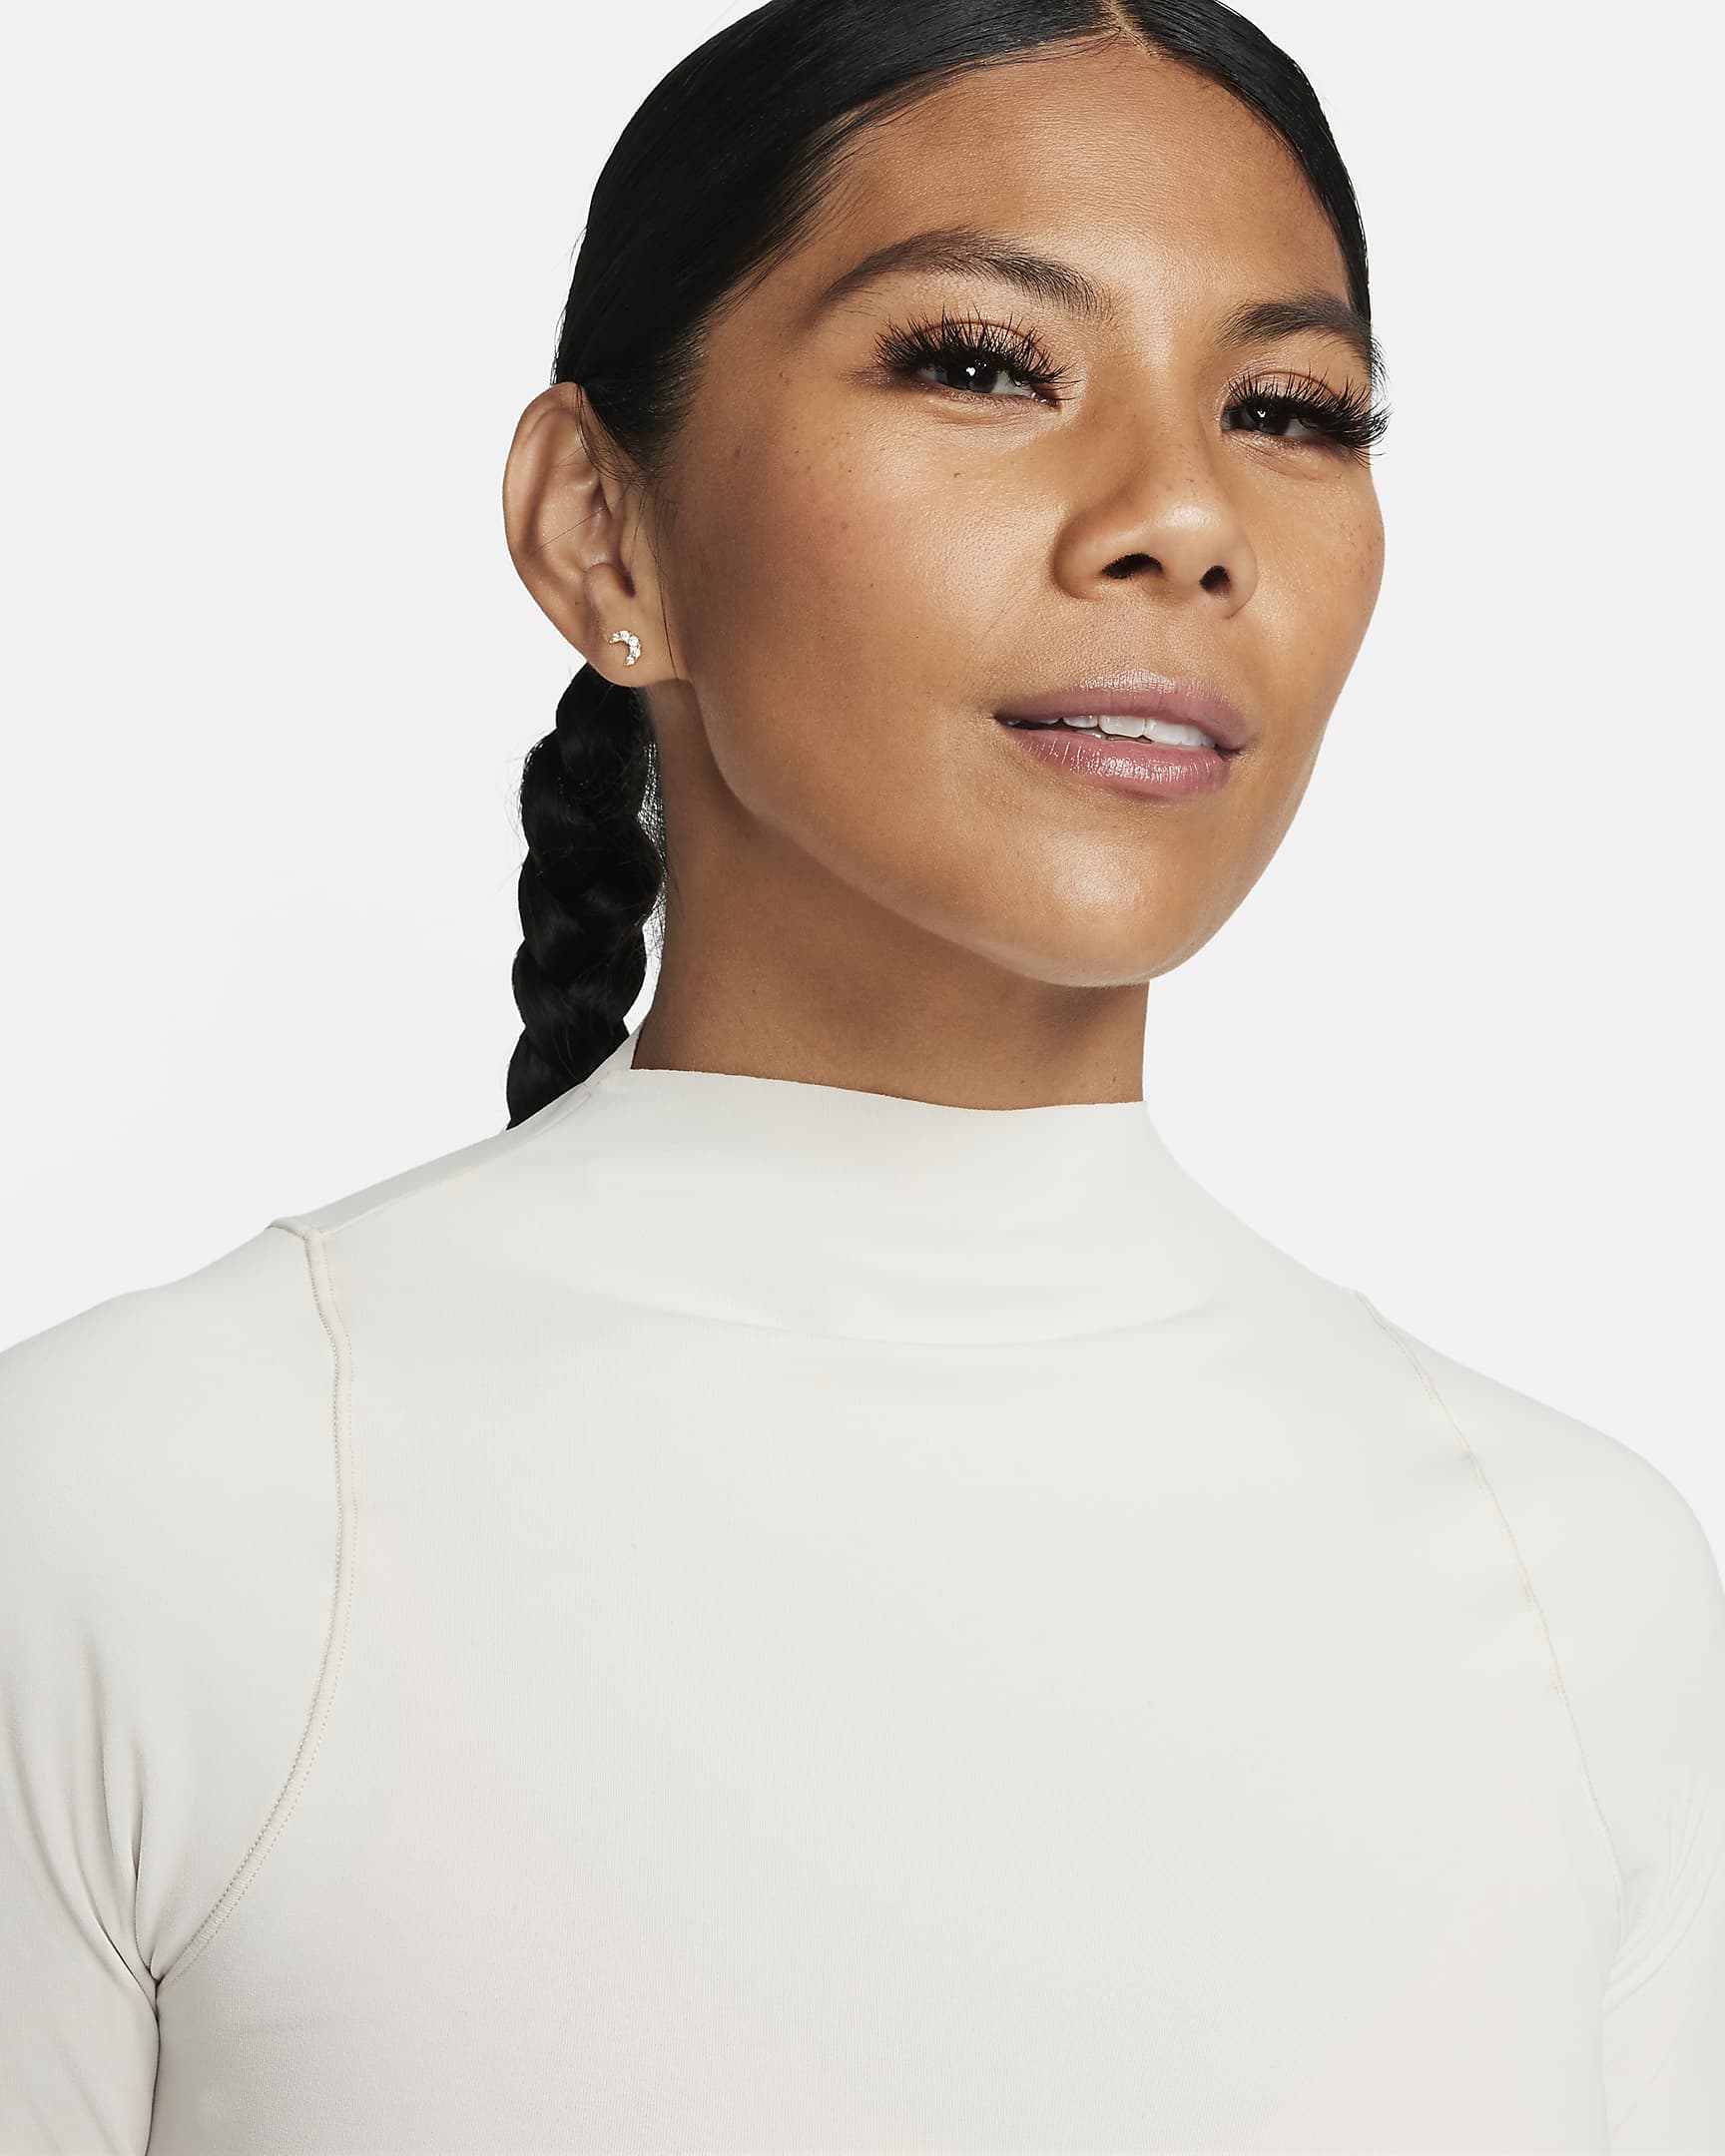 Nike Zenvy Women's Dri-FIT Long-Sleeve Top - Light Orewood Brown/White